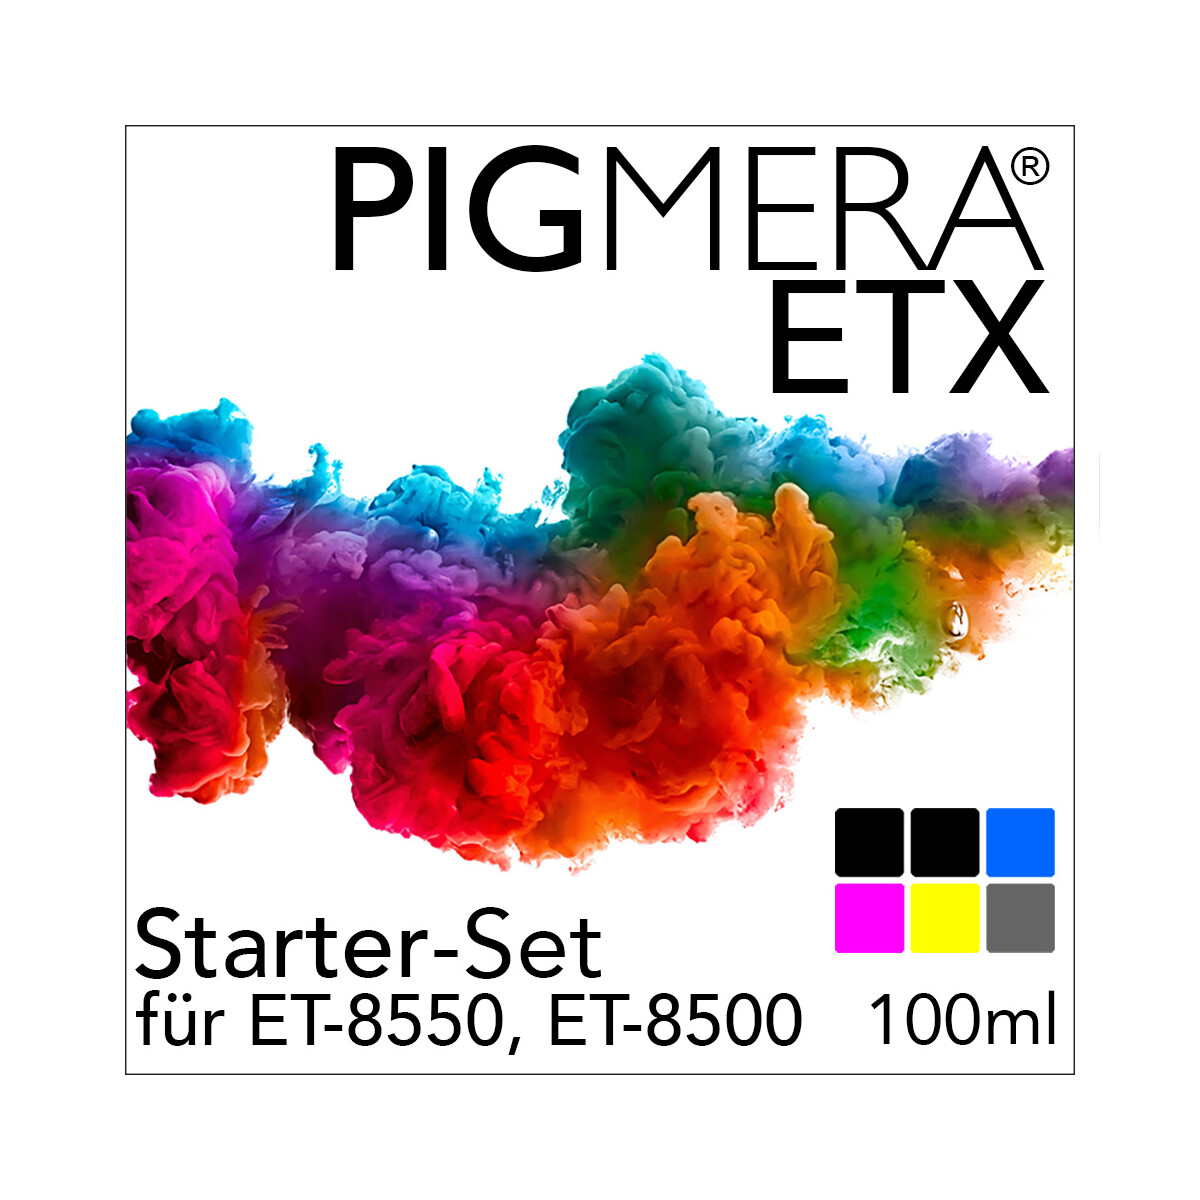 Pigmera ETX (Pigment) Starter-Set ET-8550, ET-8500 100ml